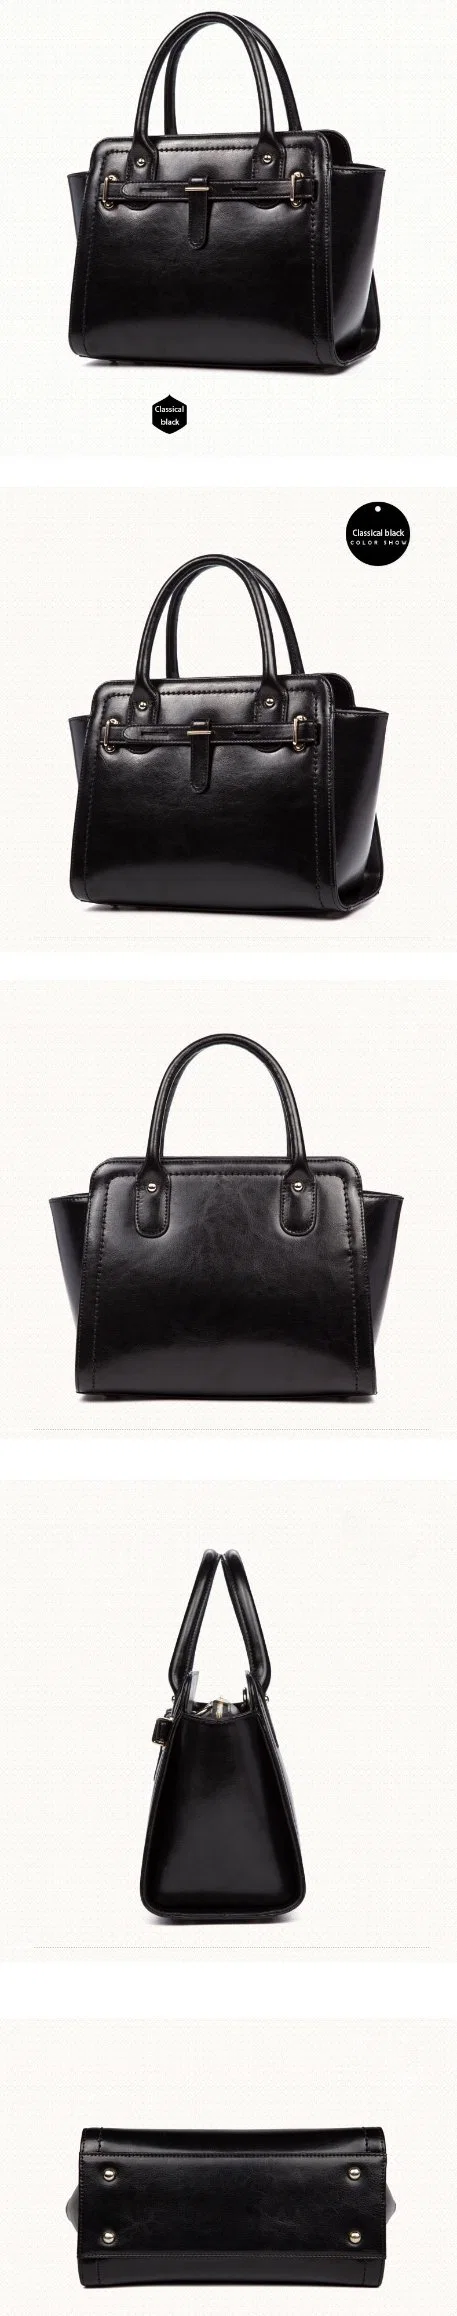 Factory Sales 2020 New European Cowhide Fashion Leather Women Bag